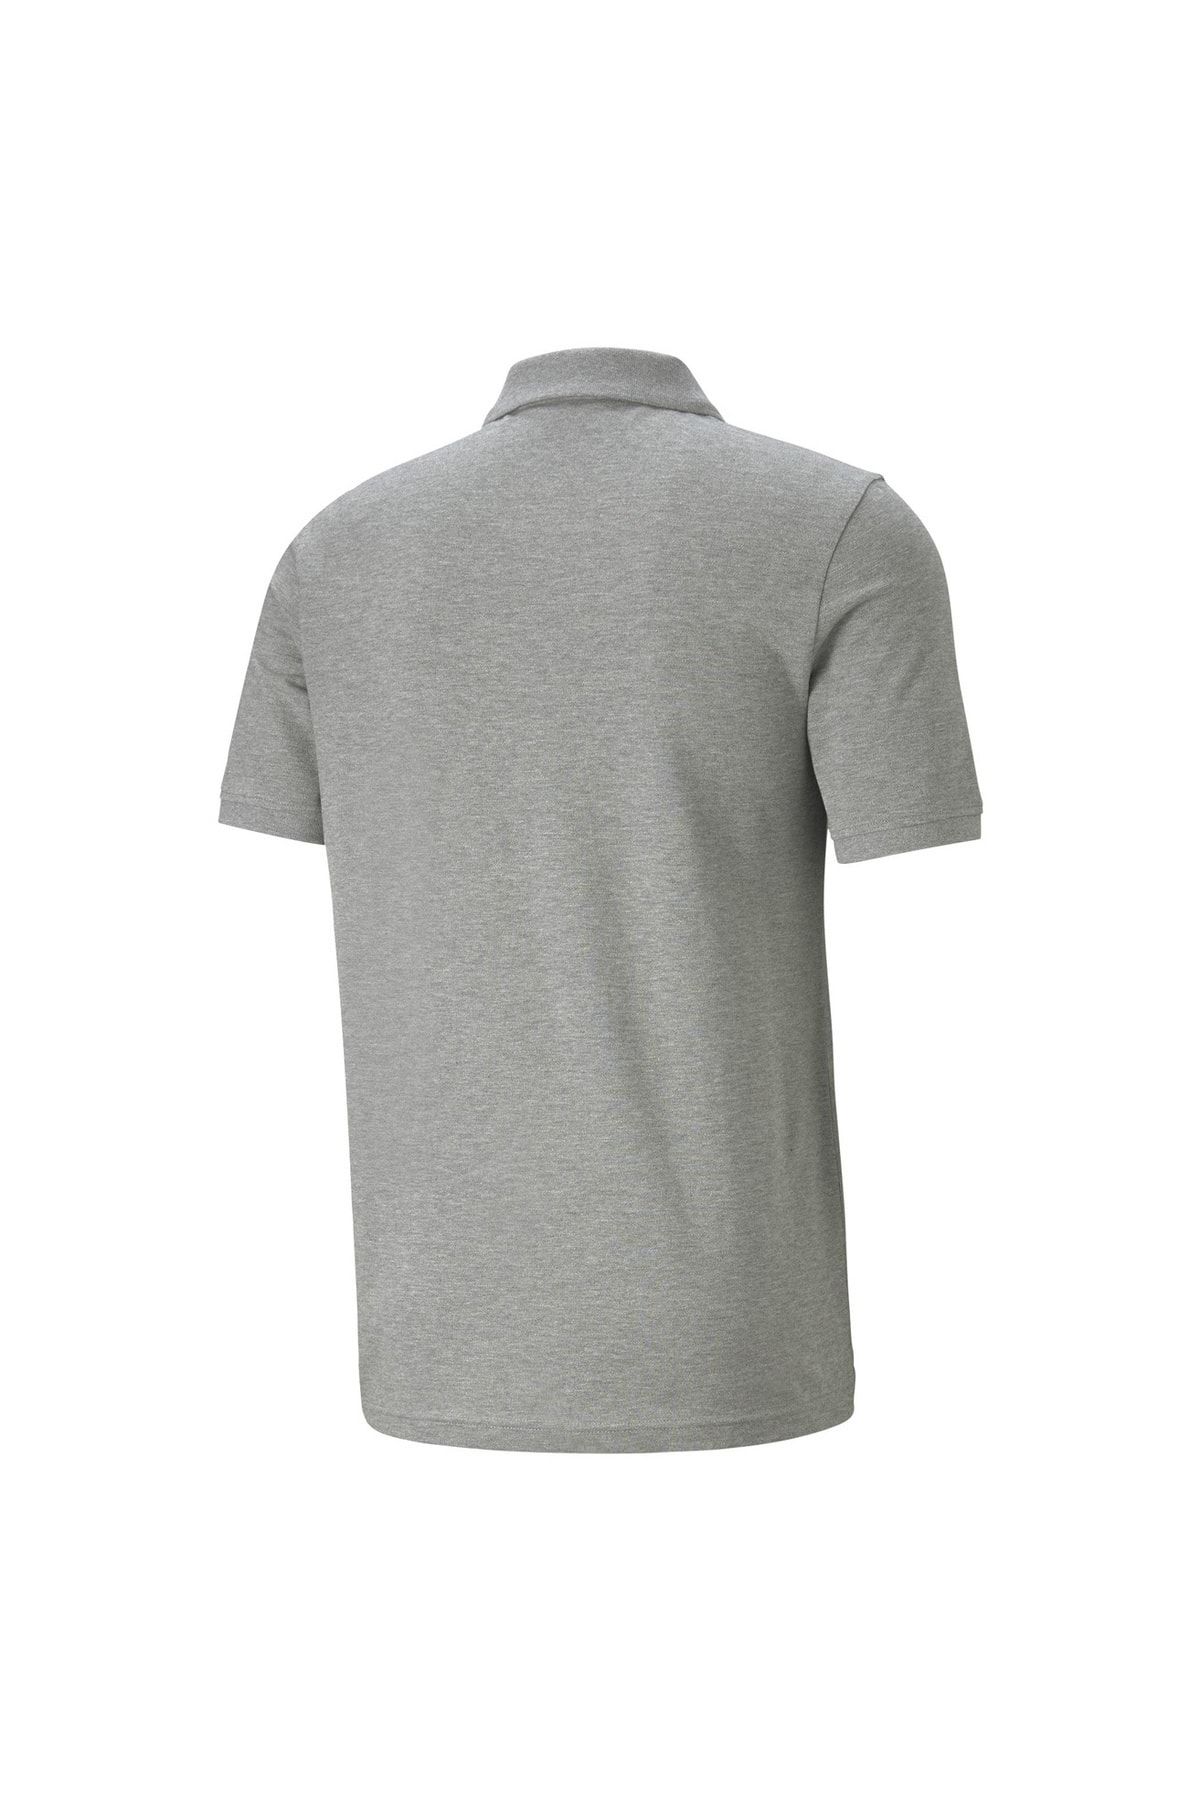 Puma Round Neck Plain Gray 58667403 ESS G Polo Men\'s Medium Pique - Trendyol T-Shirt